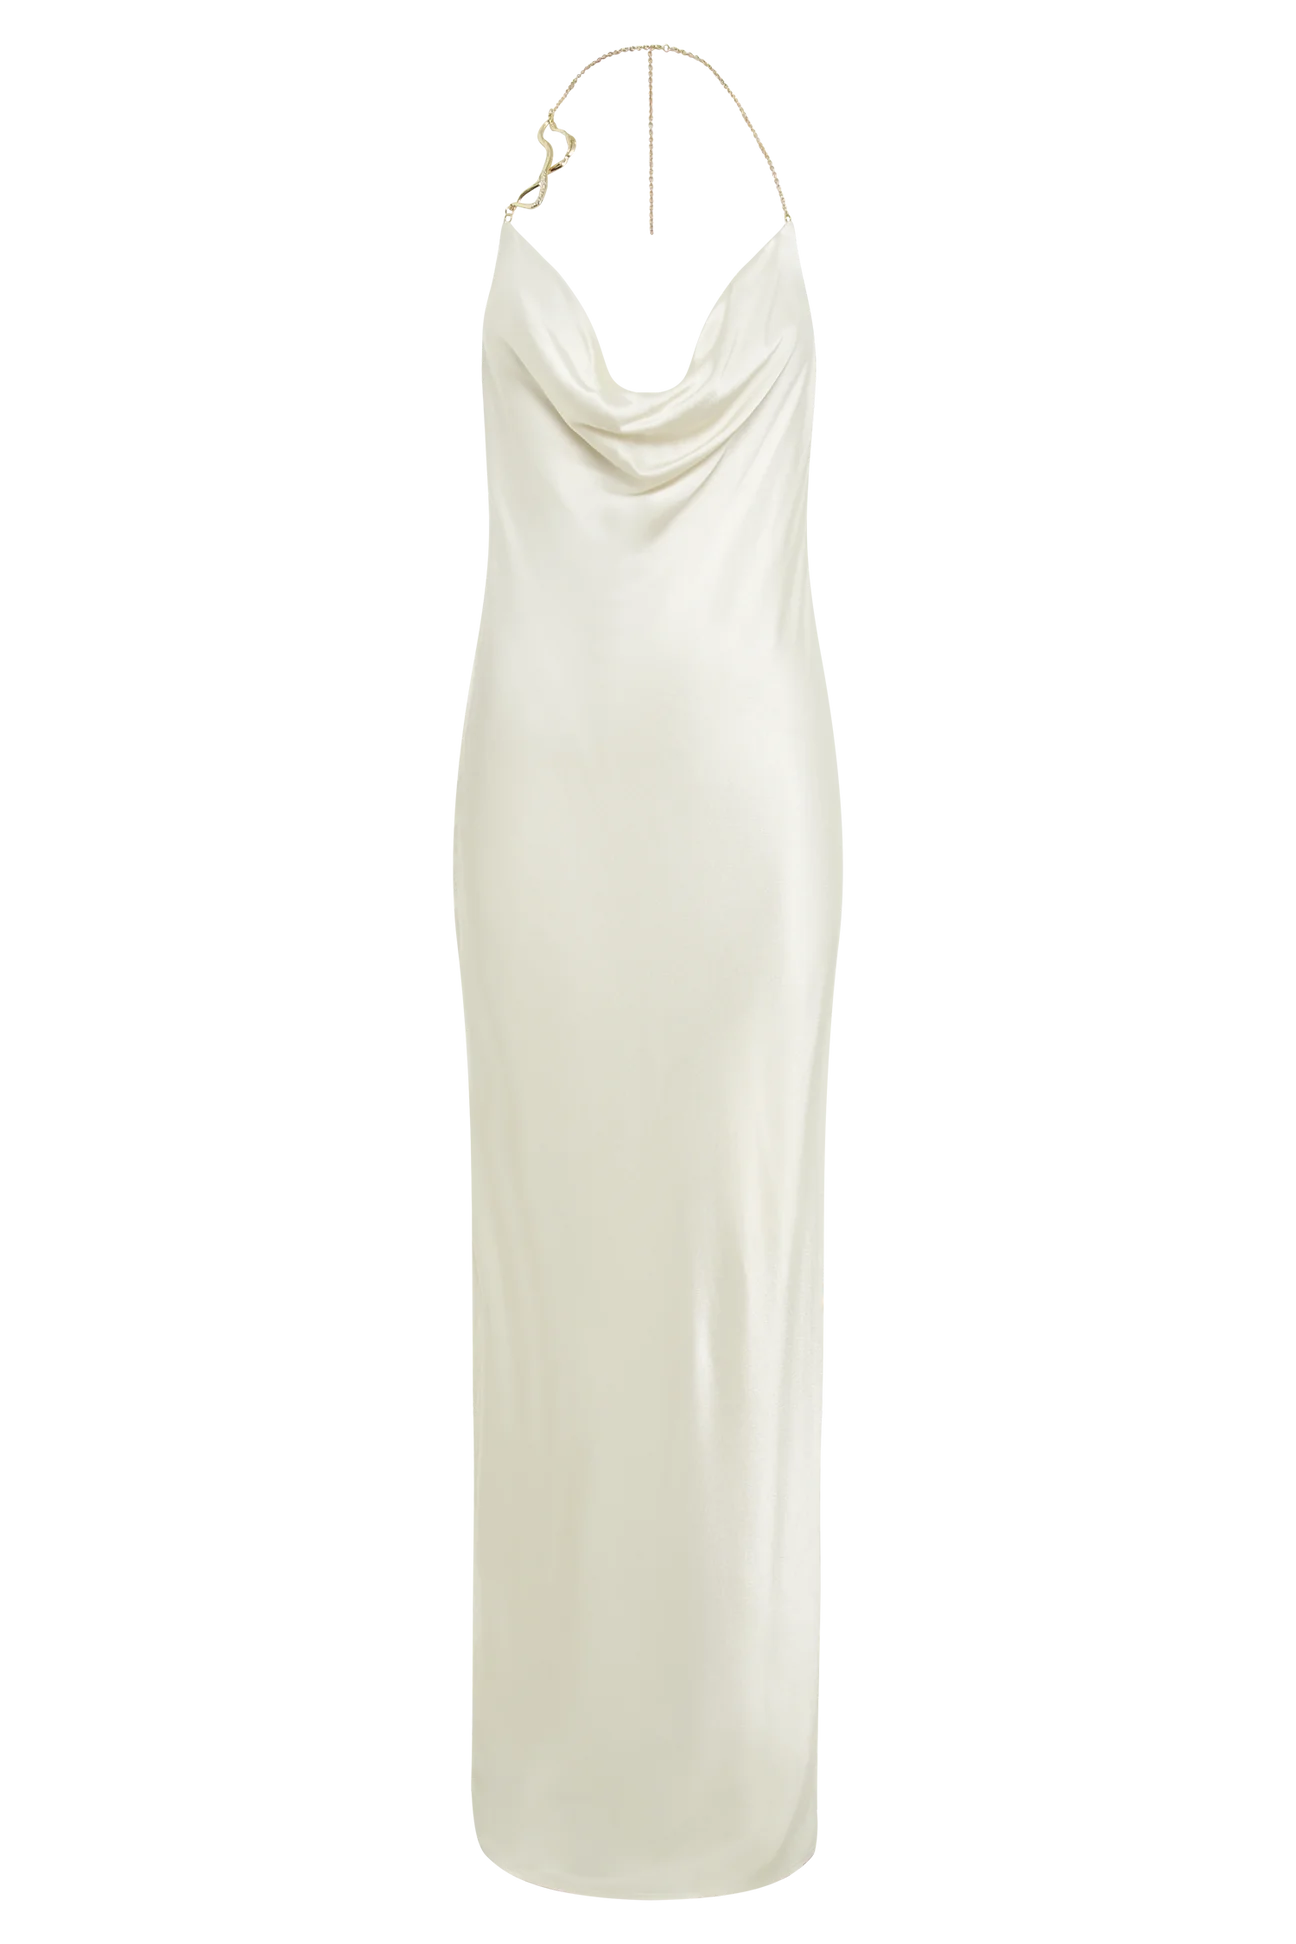 Meshki - Melissa Satin Cowl Front Maxi Dress in Ivory